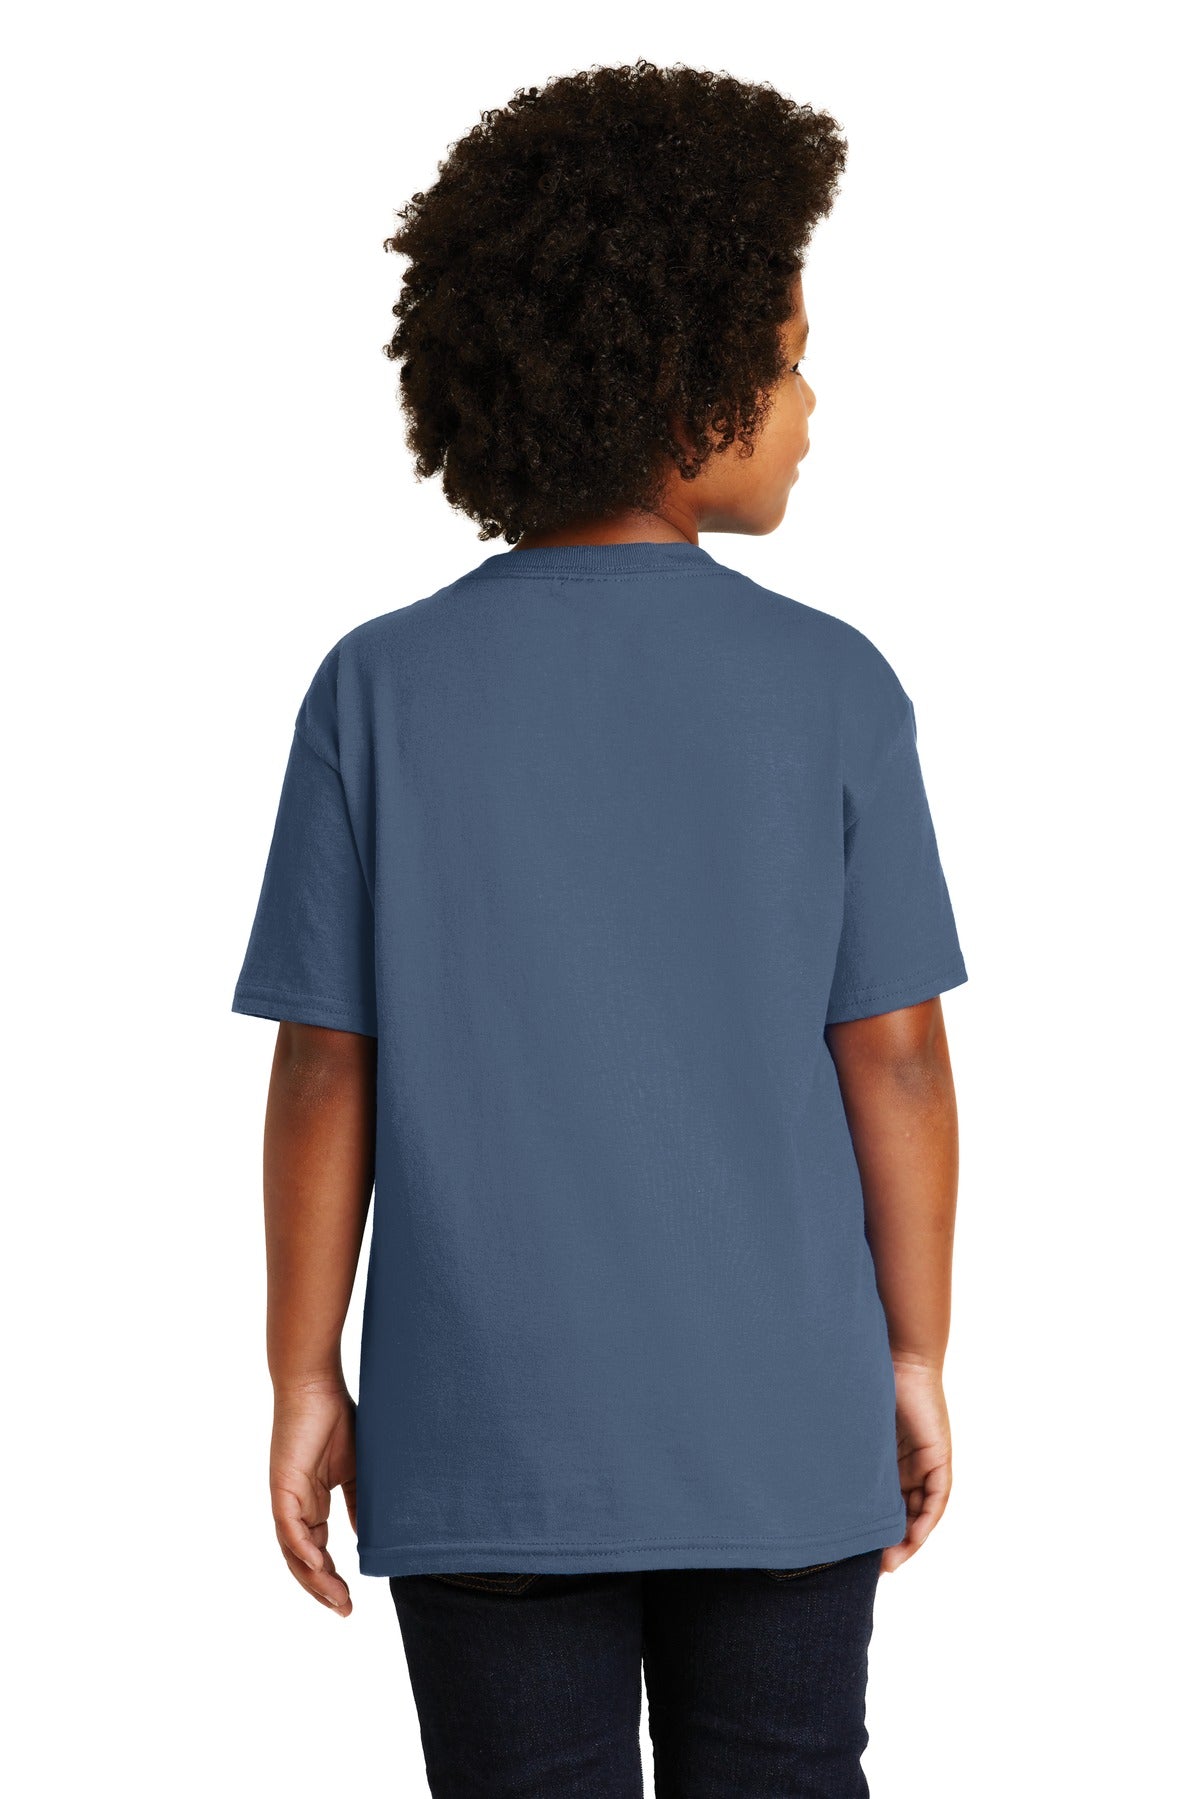 Gildan - Youth Ultra Cotton 100% US Cotton T-Shirt. 2000B - Indigo Blue